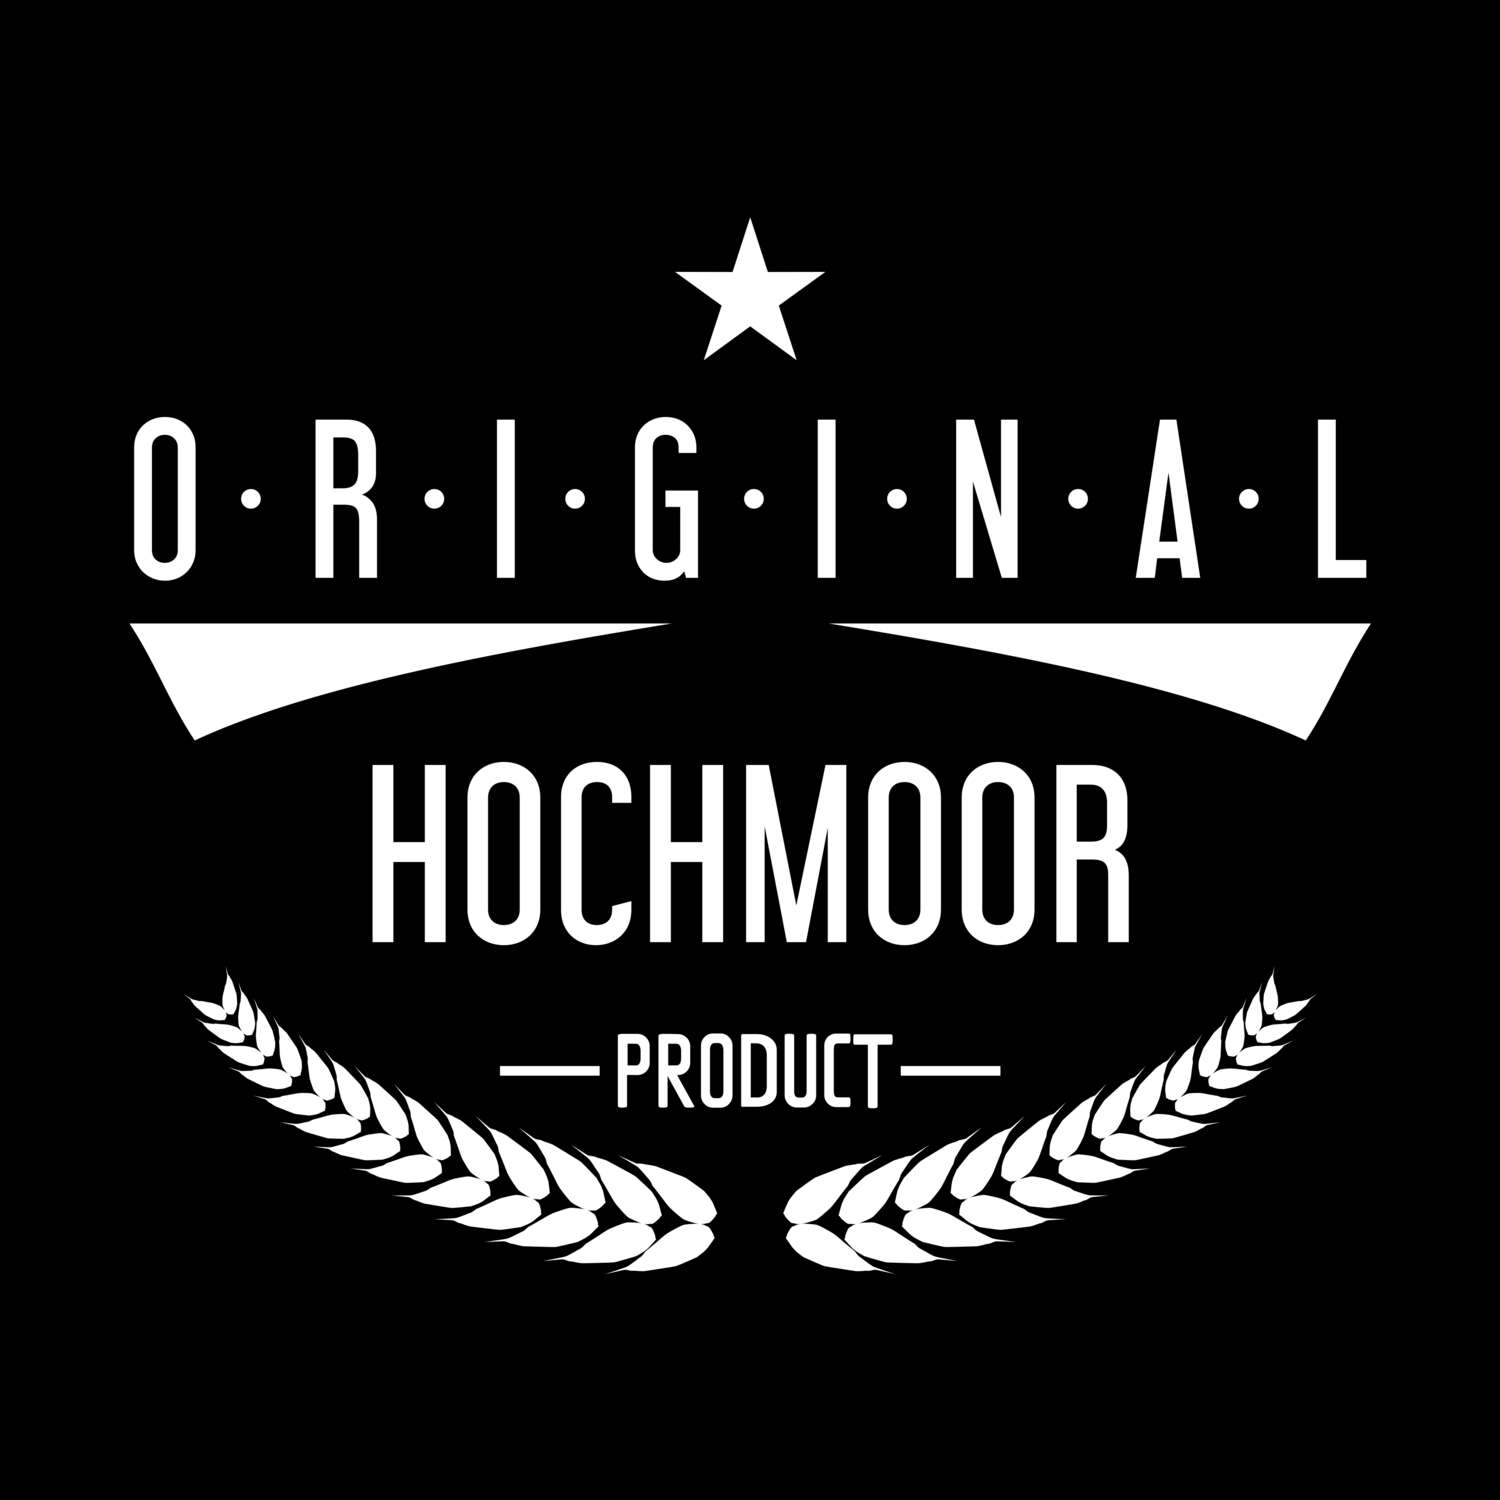 Hochmoor T-Shirt »Original Product«